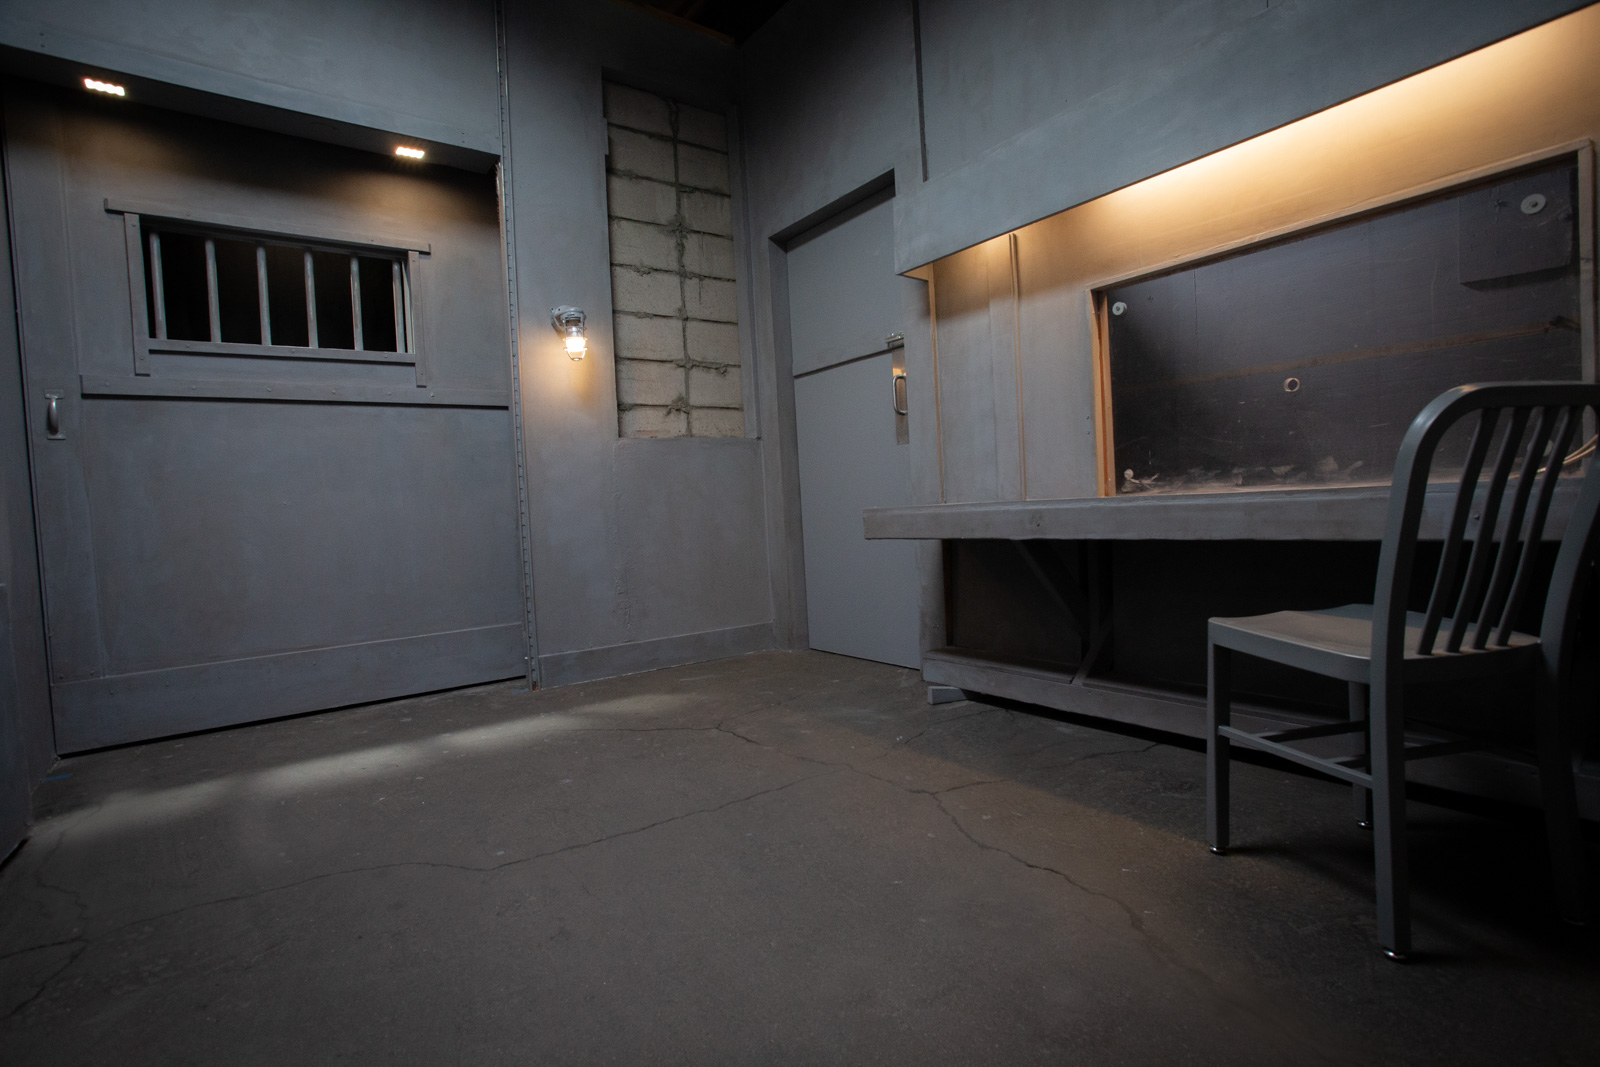 Jail visitation film location for rent in LA